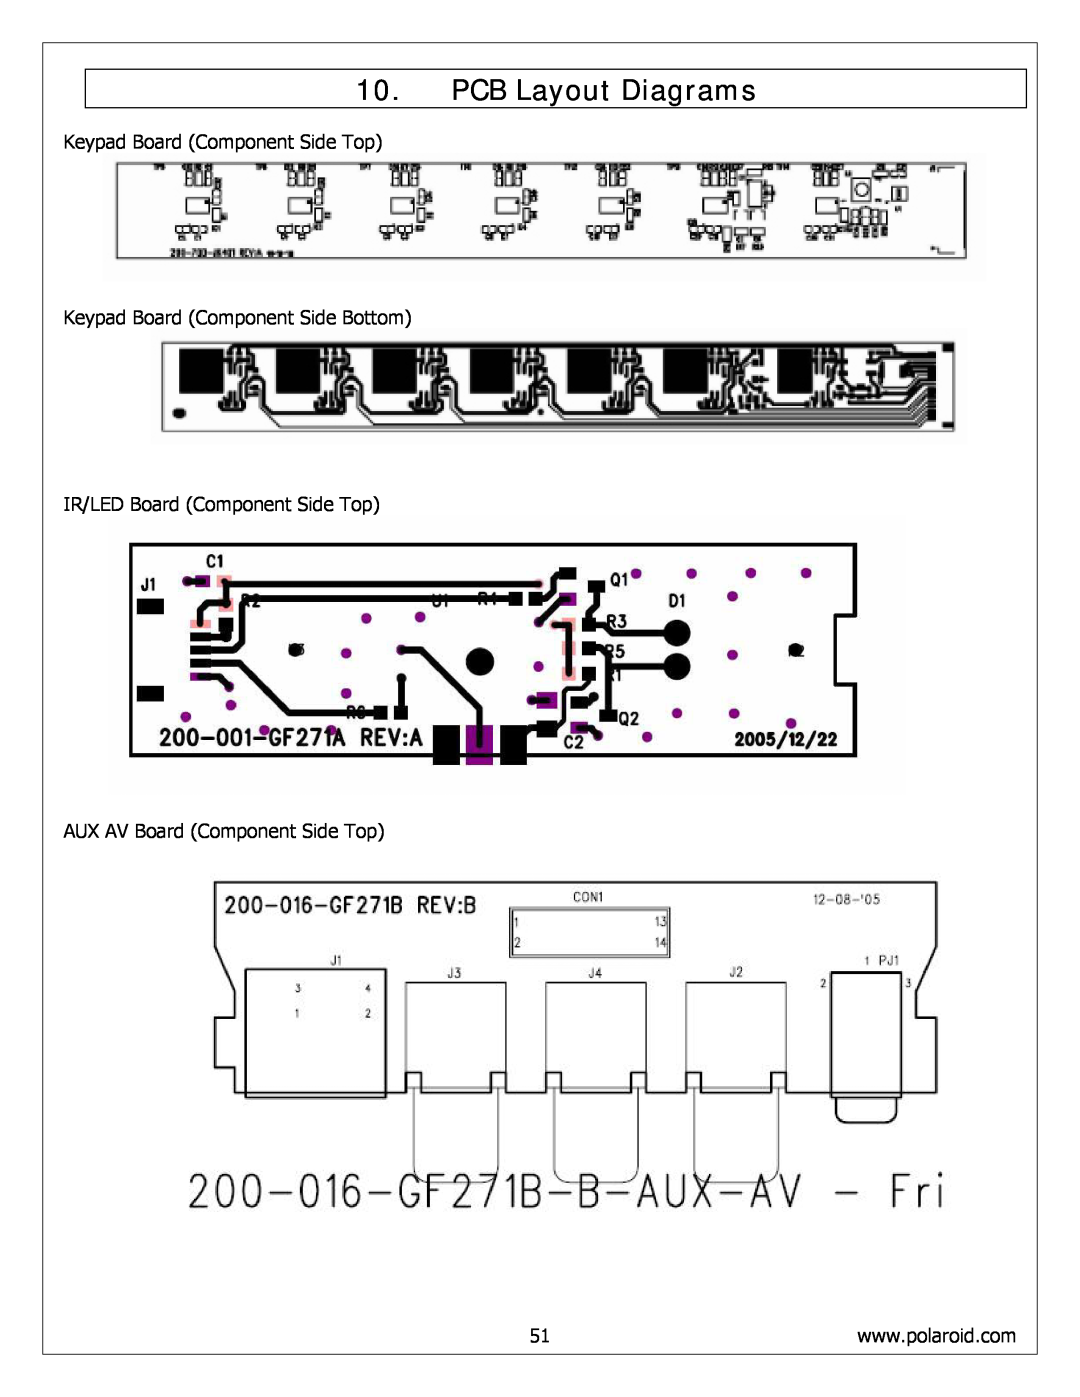 Polaroid FLM-4034B, FLM-4234BH PCB Layout Diagrams, Keypad Board Component Side Top Keypad Board Component Side Bottom 